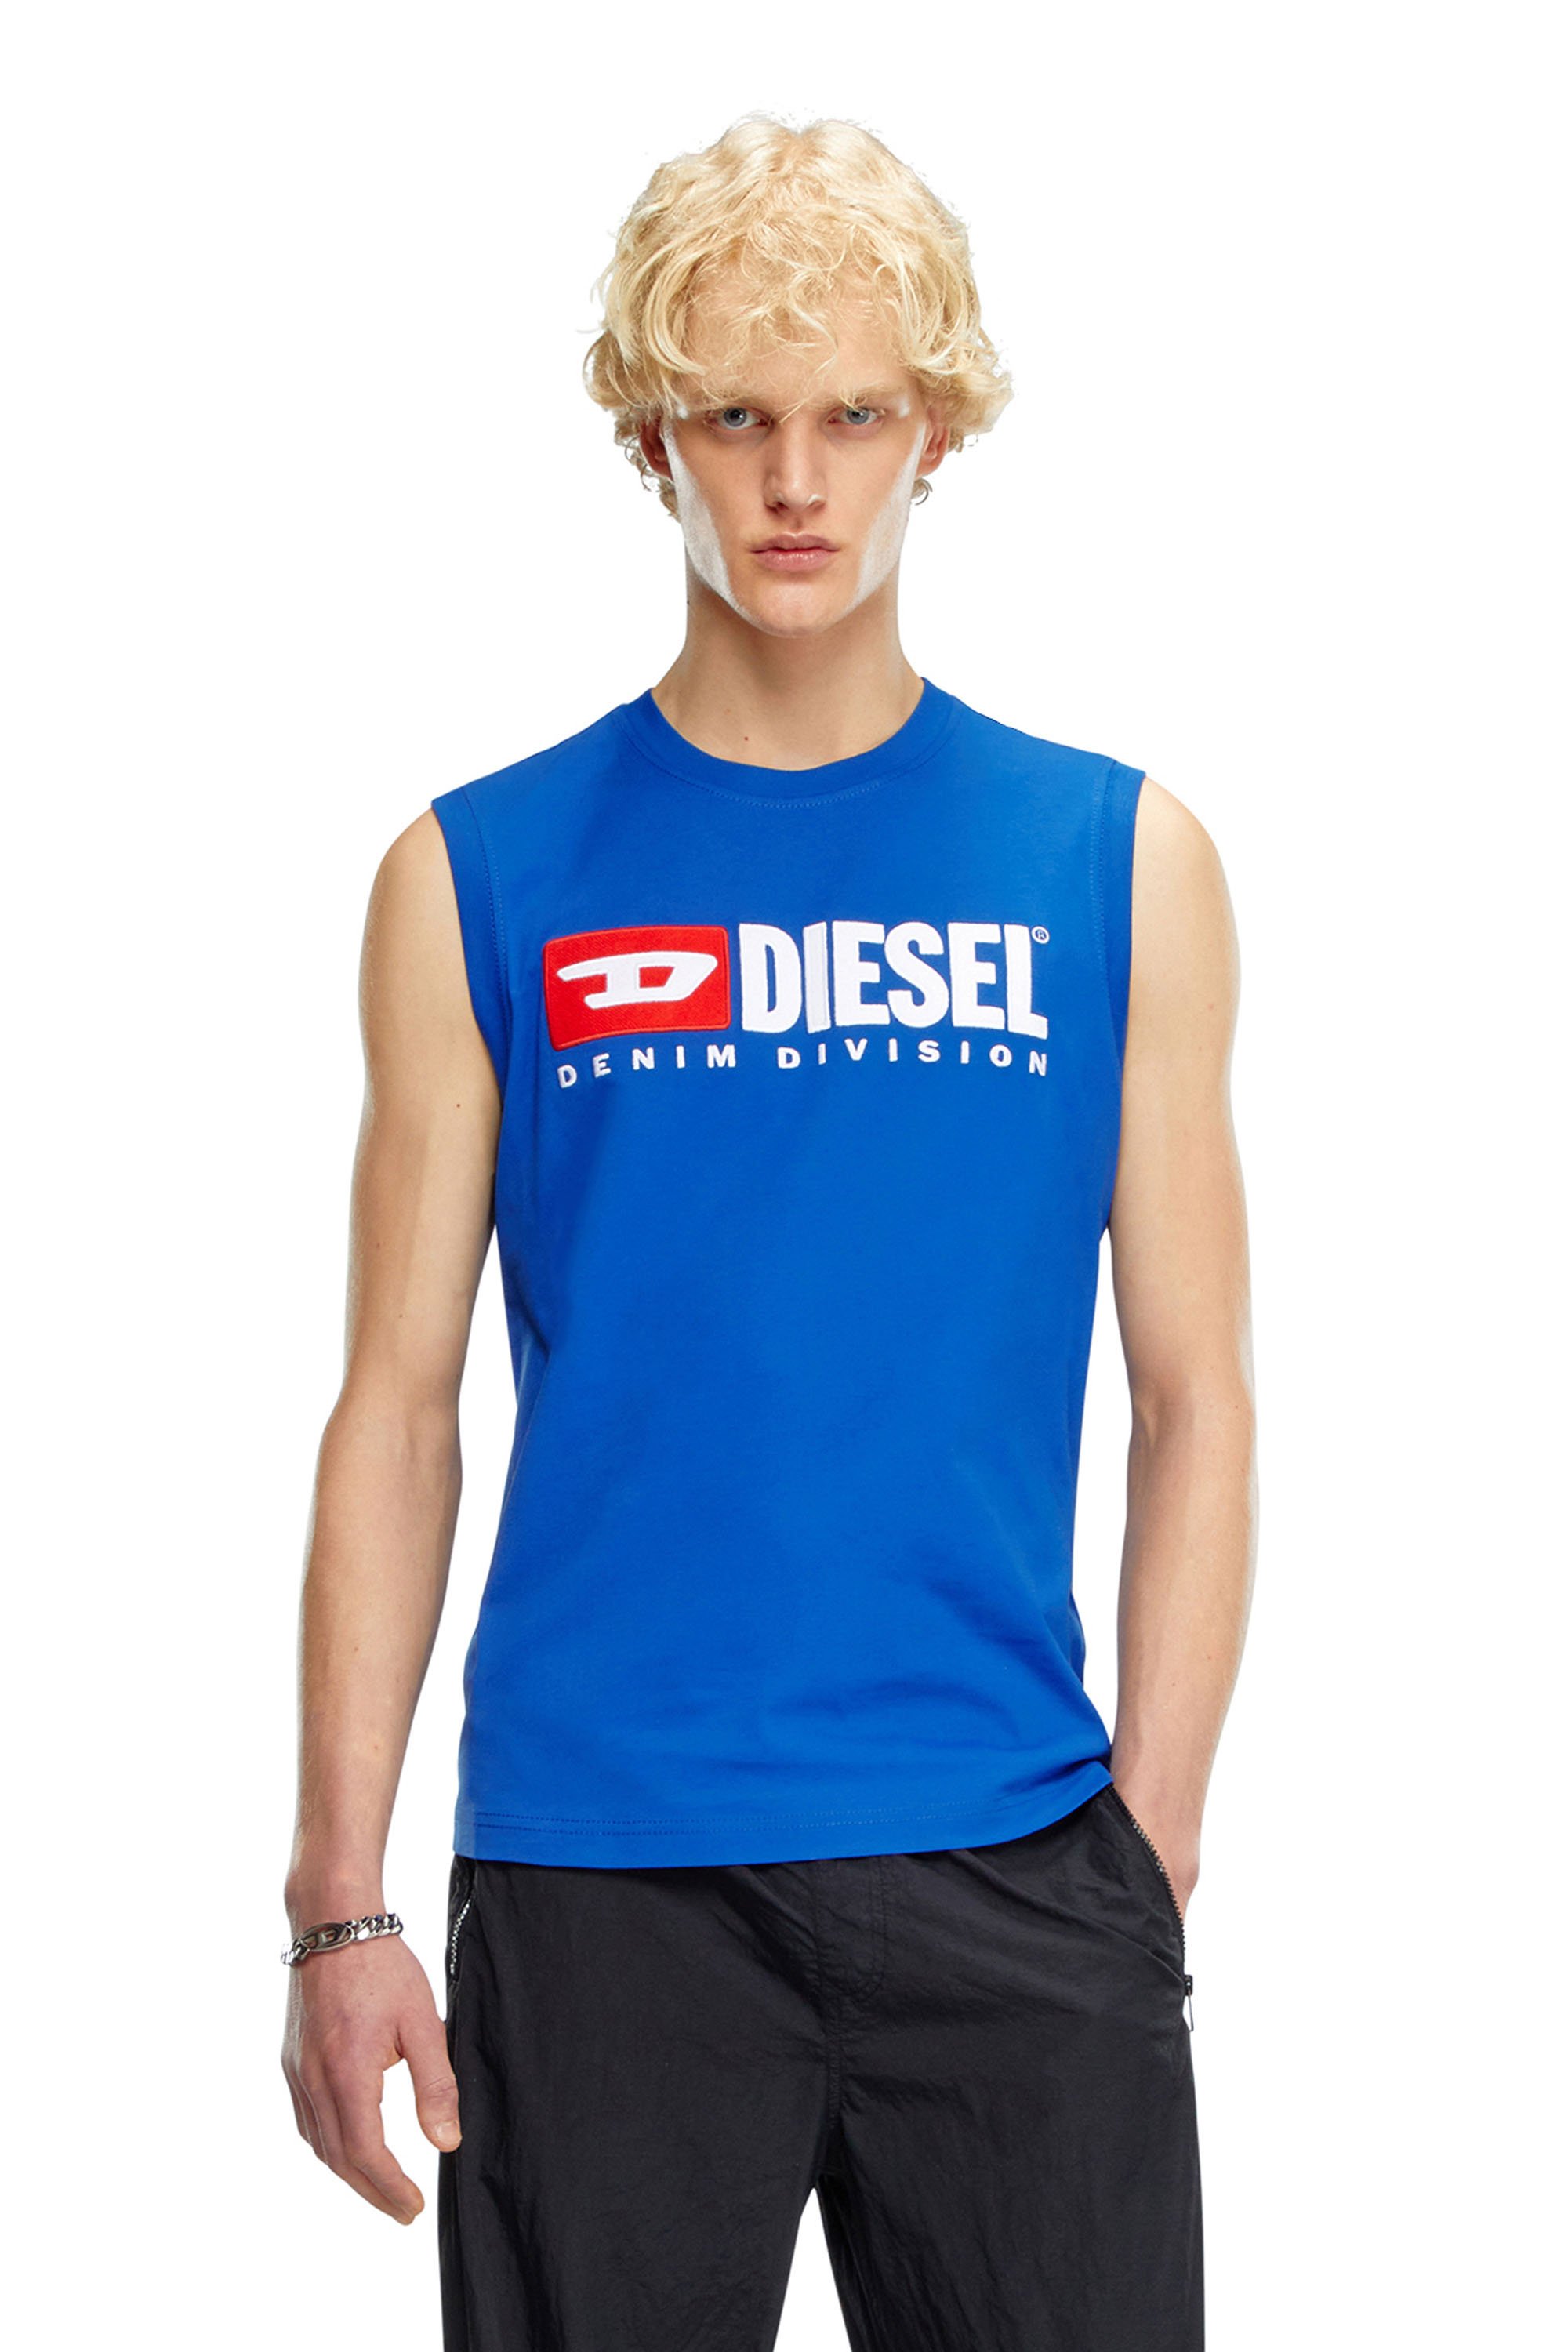 Diesel - T-ISCO-DIV, Blue - Image 1